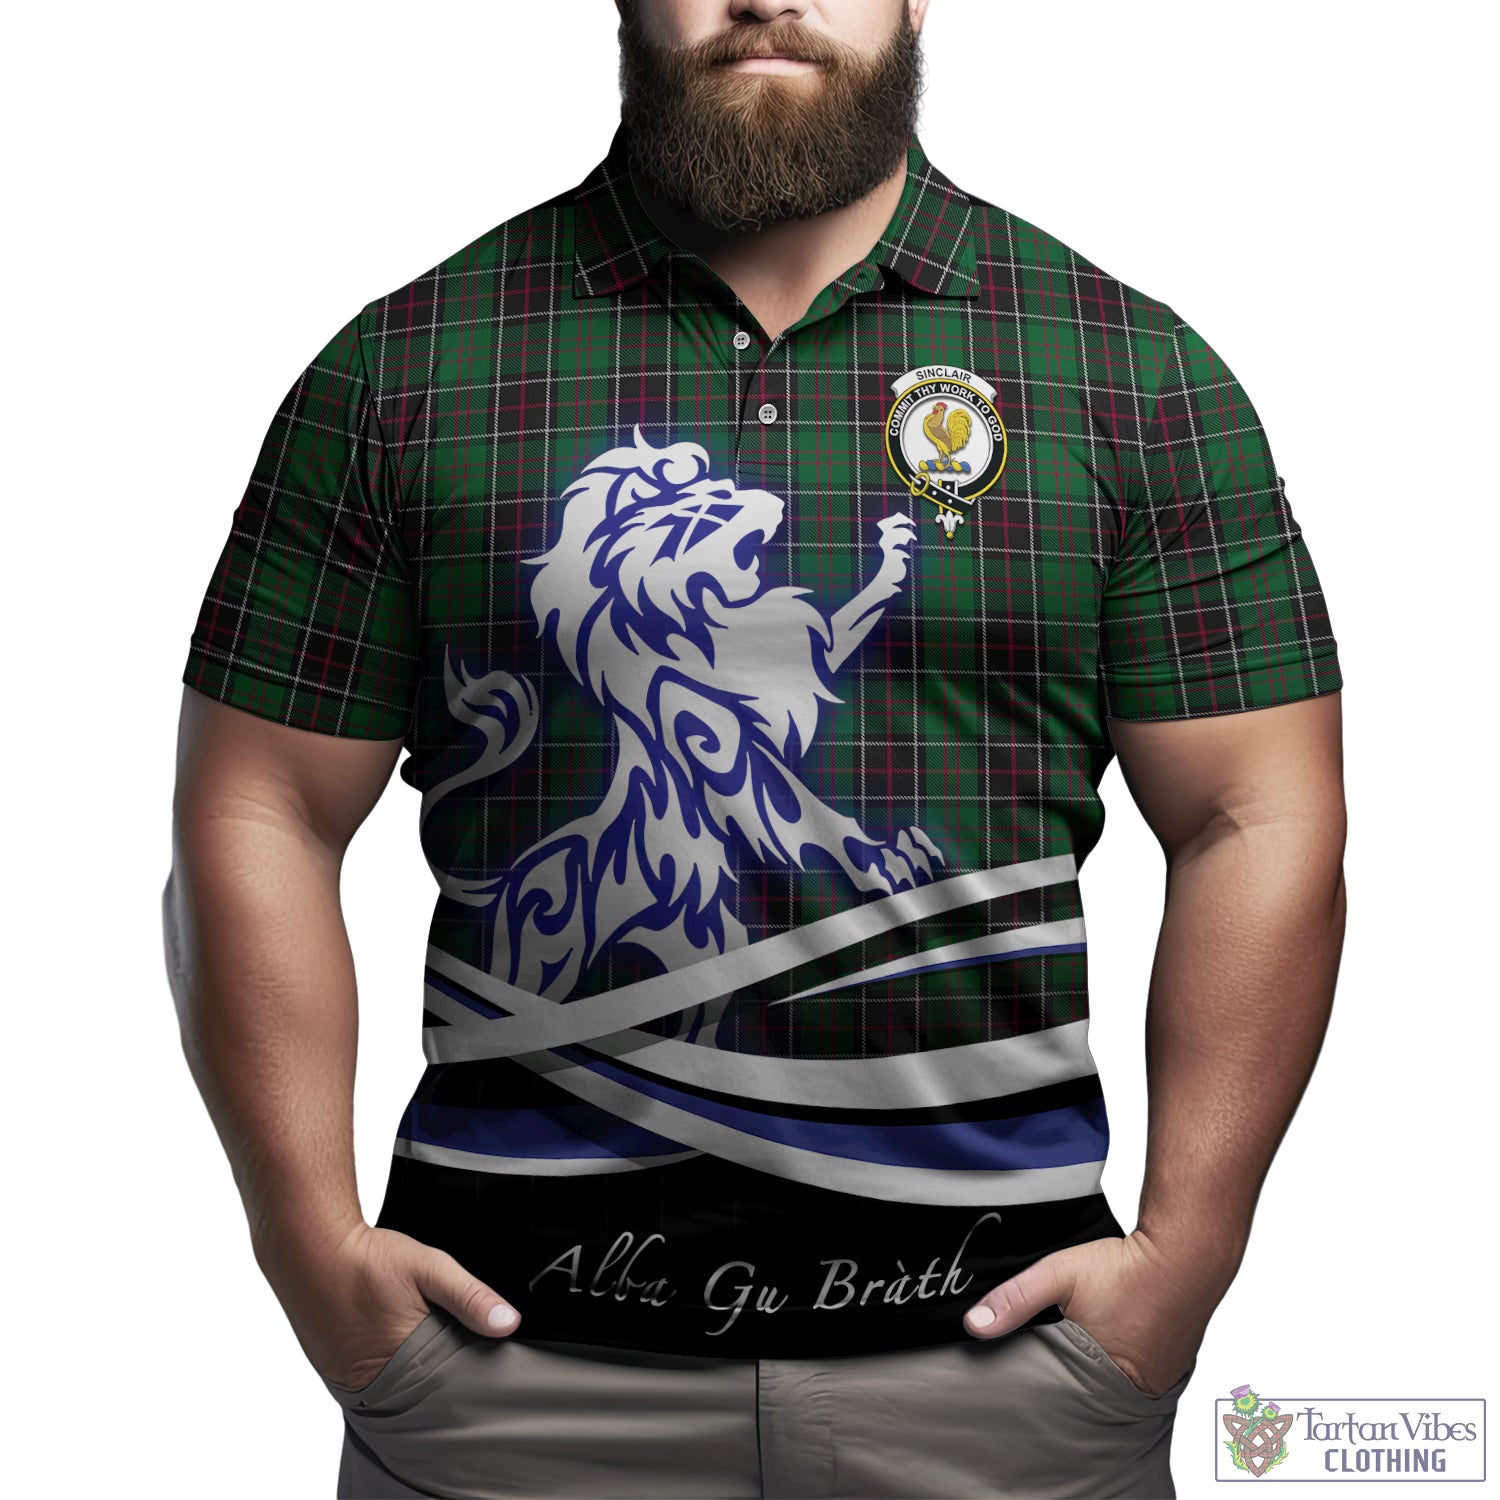 sinclair-hunting-tartan-polo-shirt-with-alba-gu-brath-regal-lion-emblem